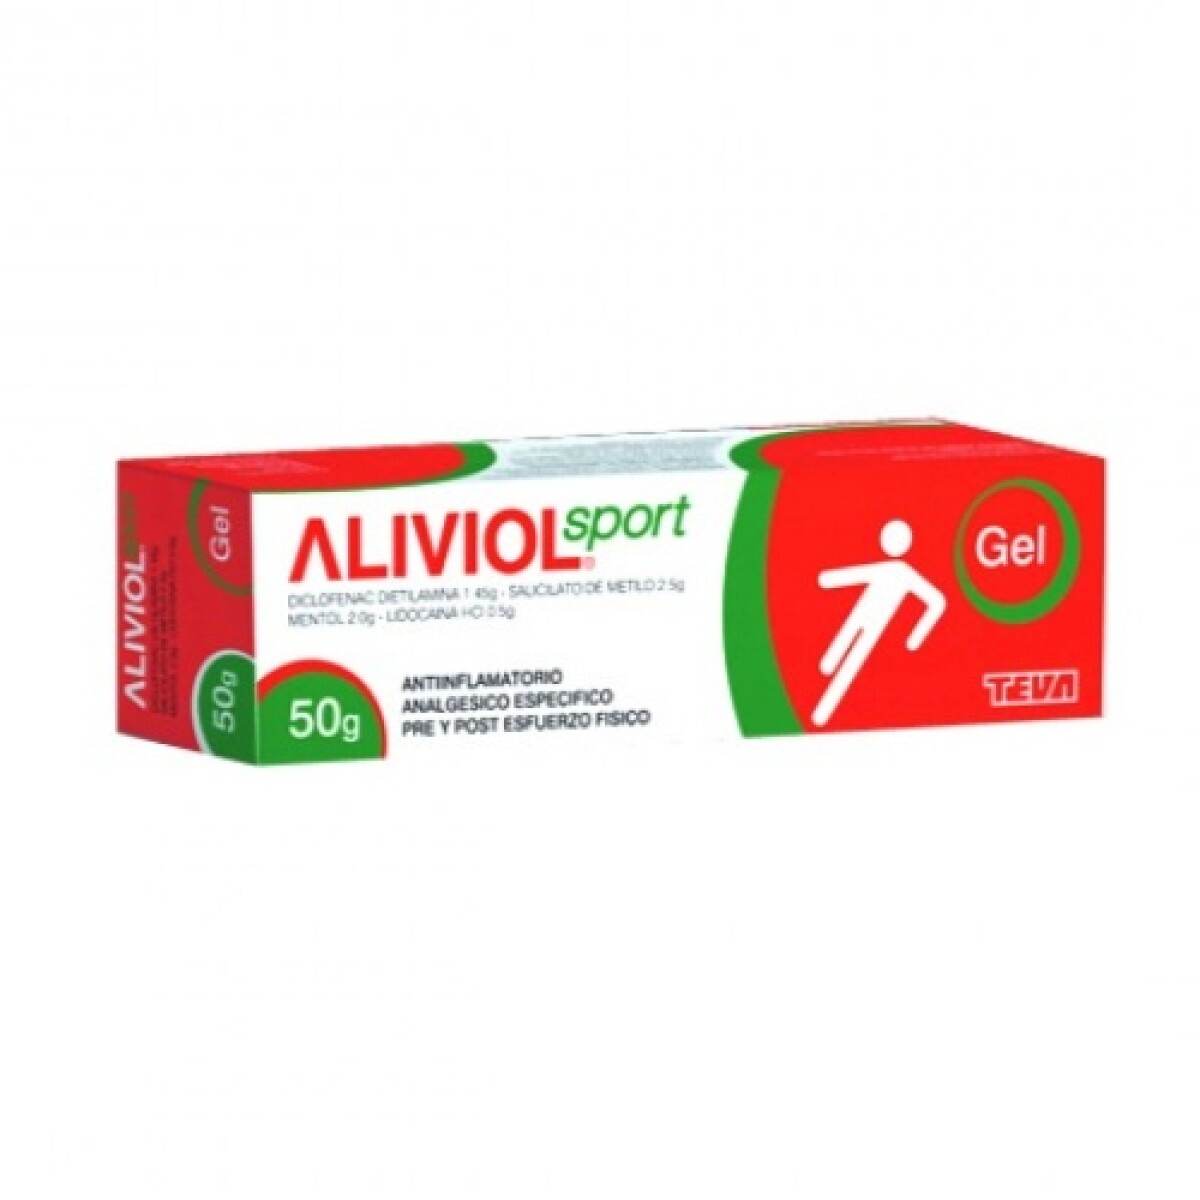 Aliviol gel sport 50 g 